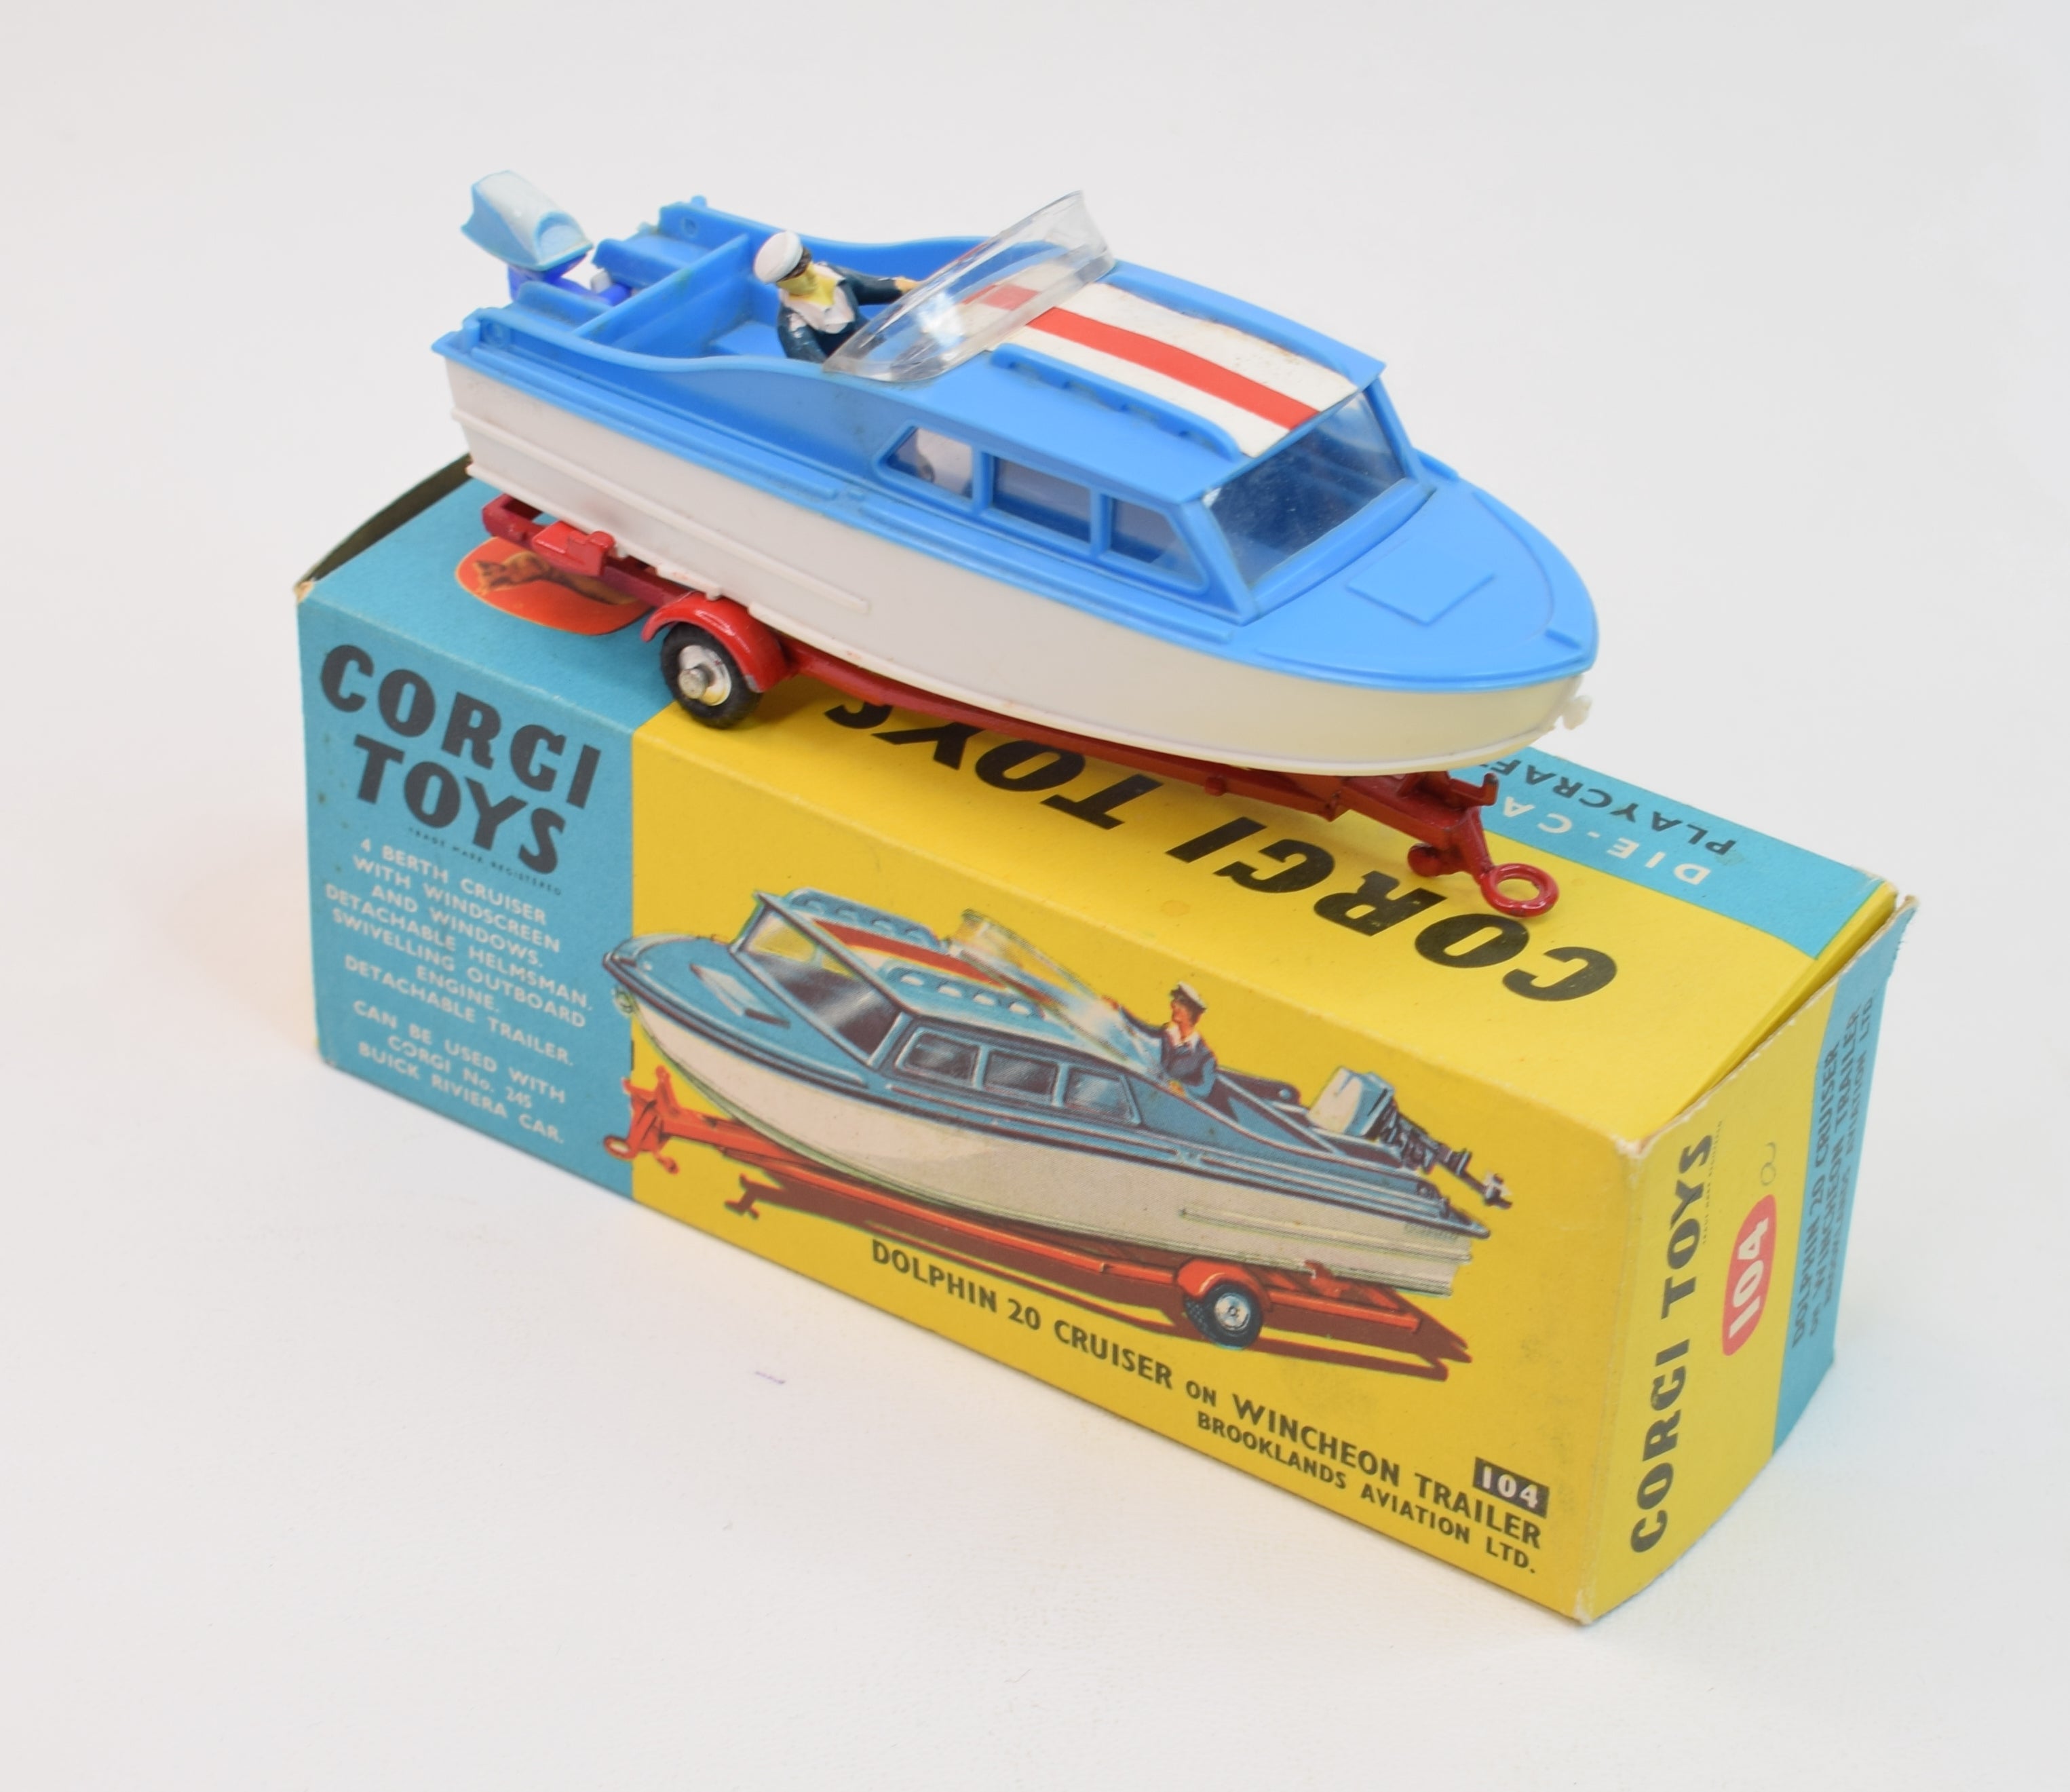 Corgi toys 104 Dolphin Cruiser Very Near Mint/Boxed The 'JJP 